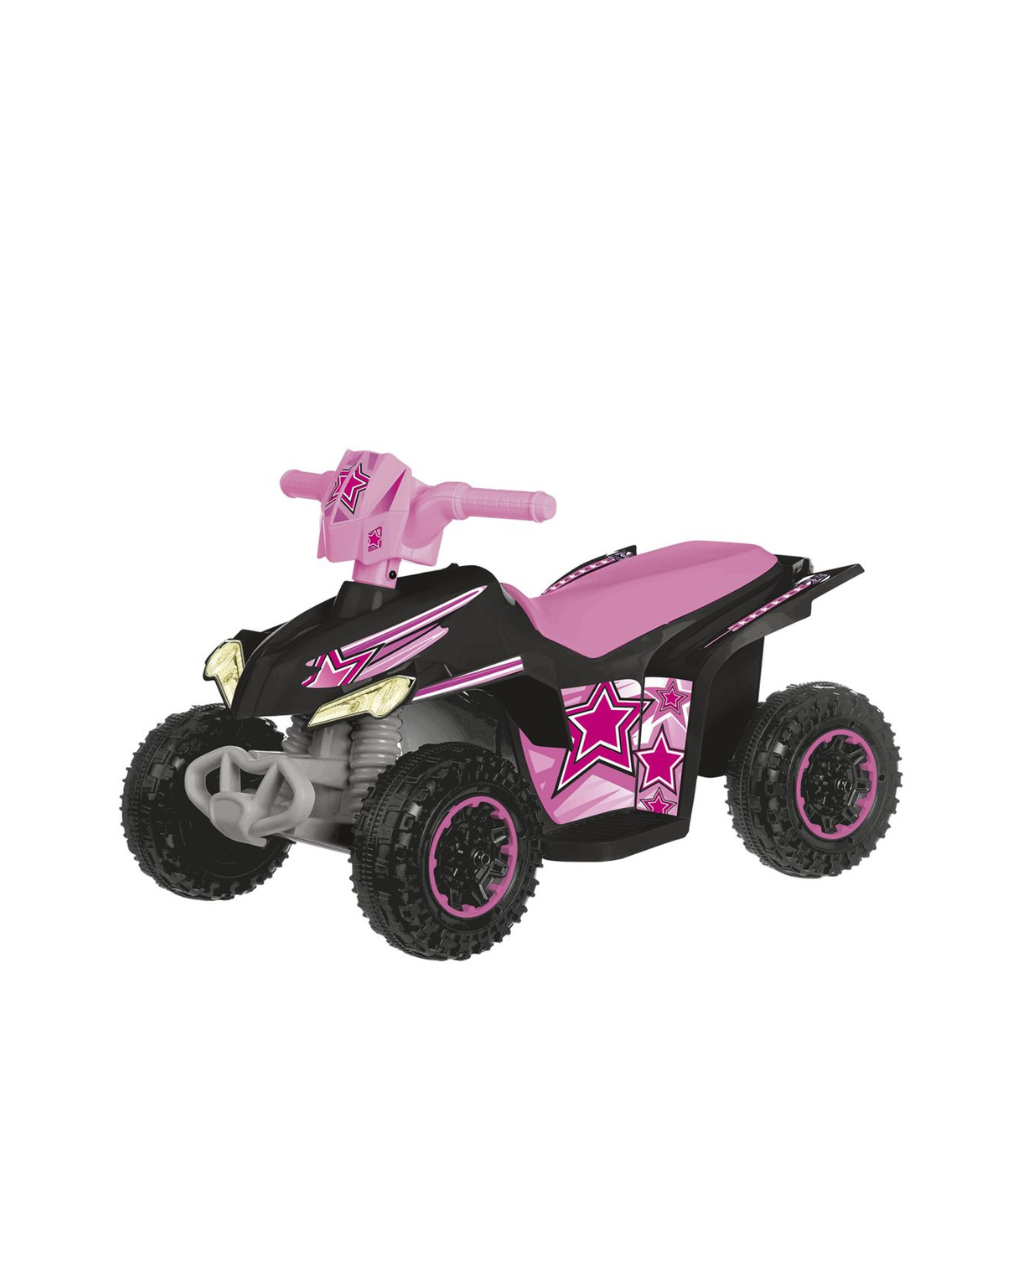 Sun & sport – ηλεκτροκίνητη quad γουρούνα 6v ροζ rdf52142 - Sun&Sport